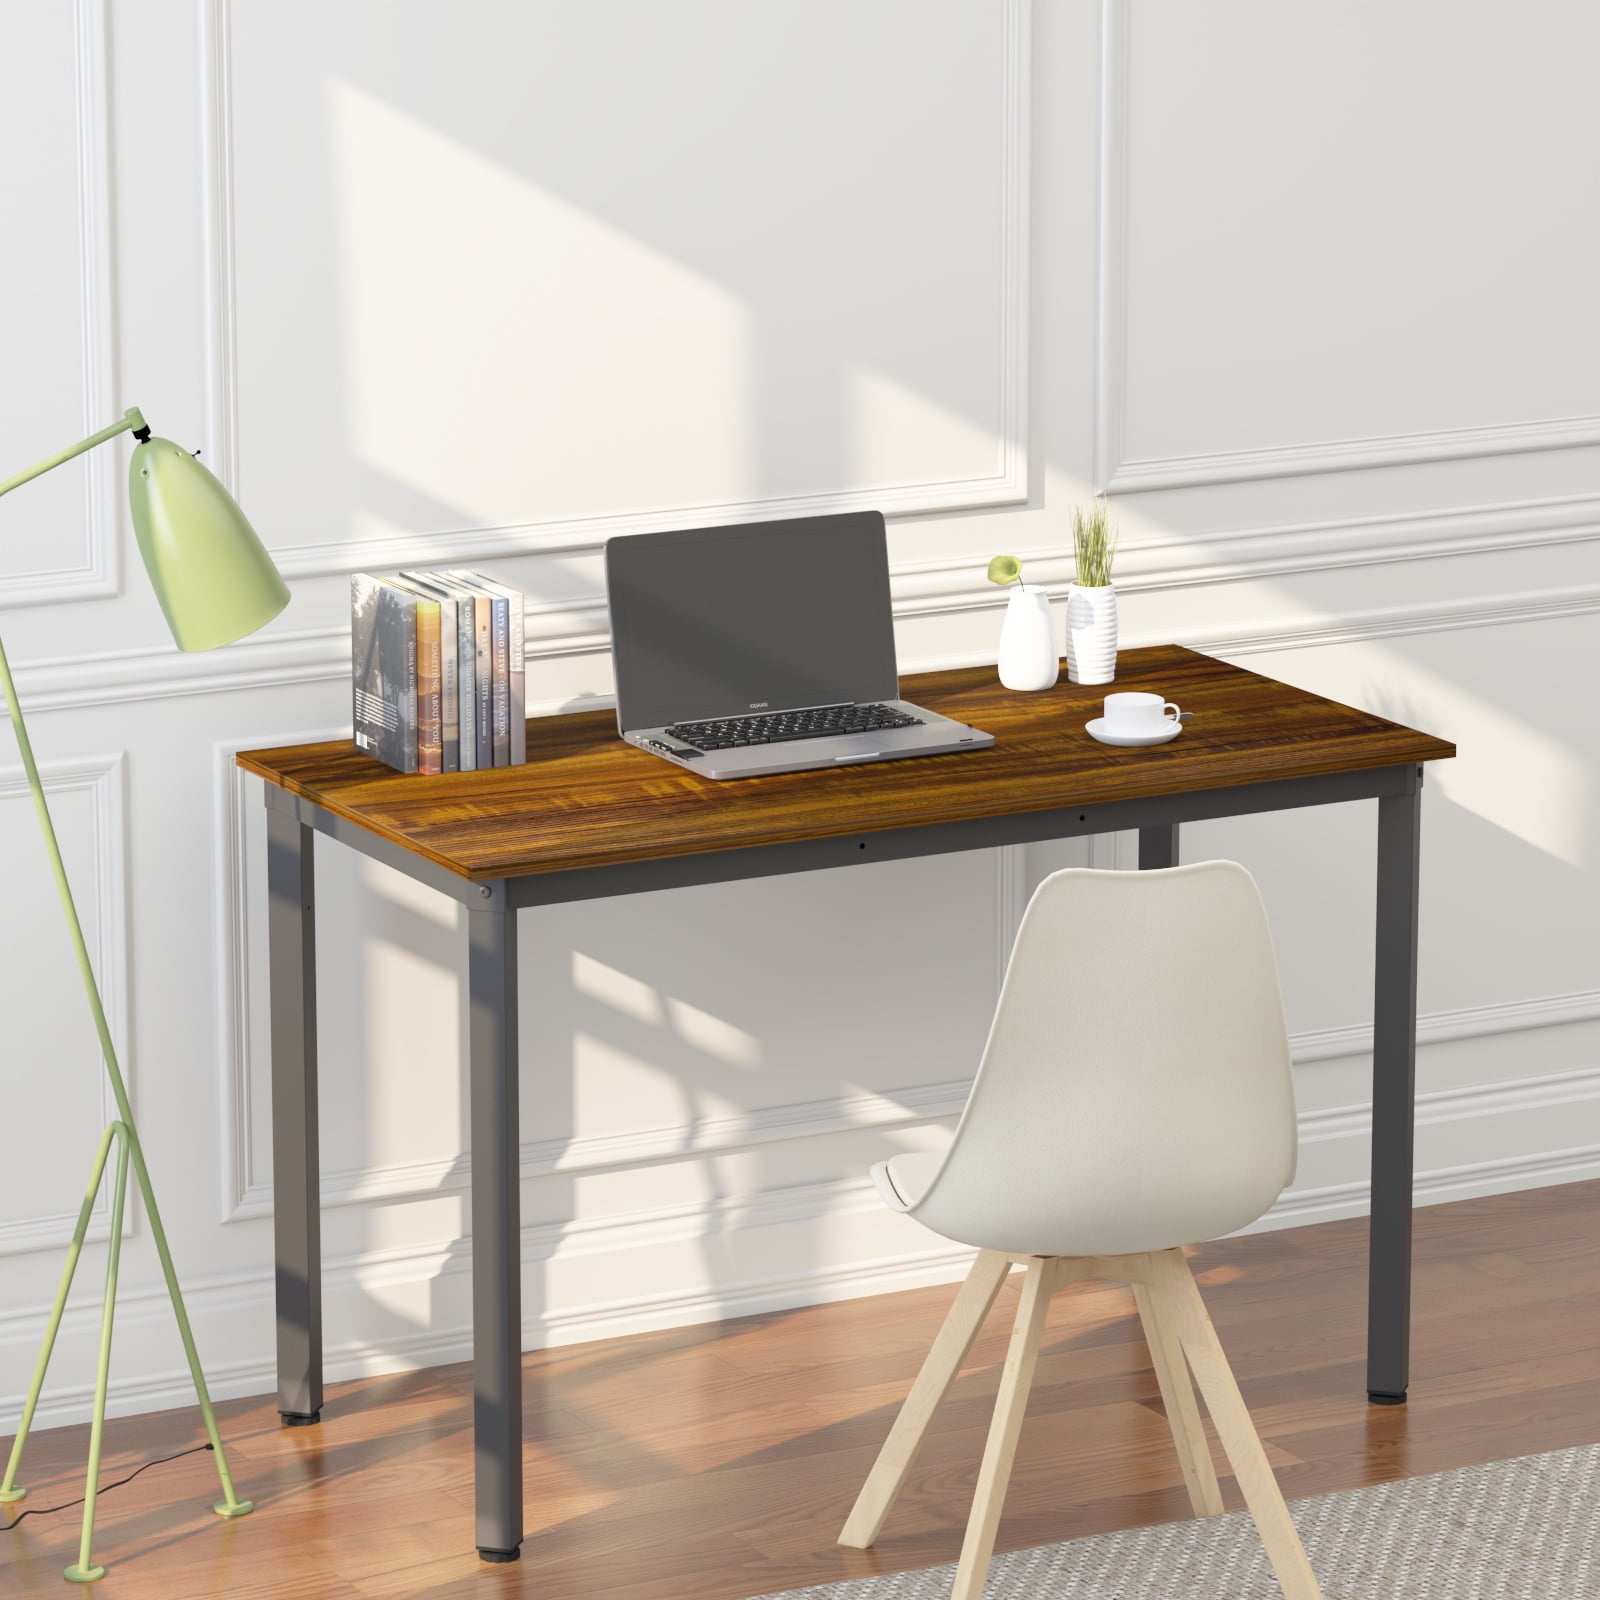 47" Modern Computer Desk Laptop Desktop Study Writing Dining Table Home Office 